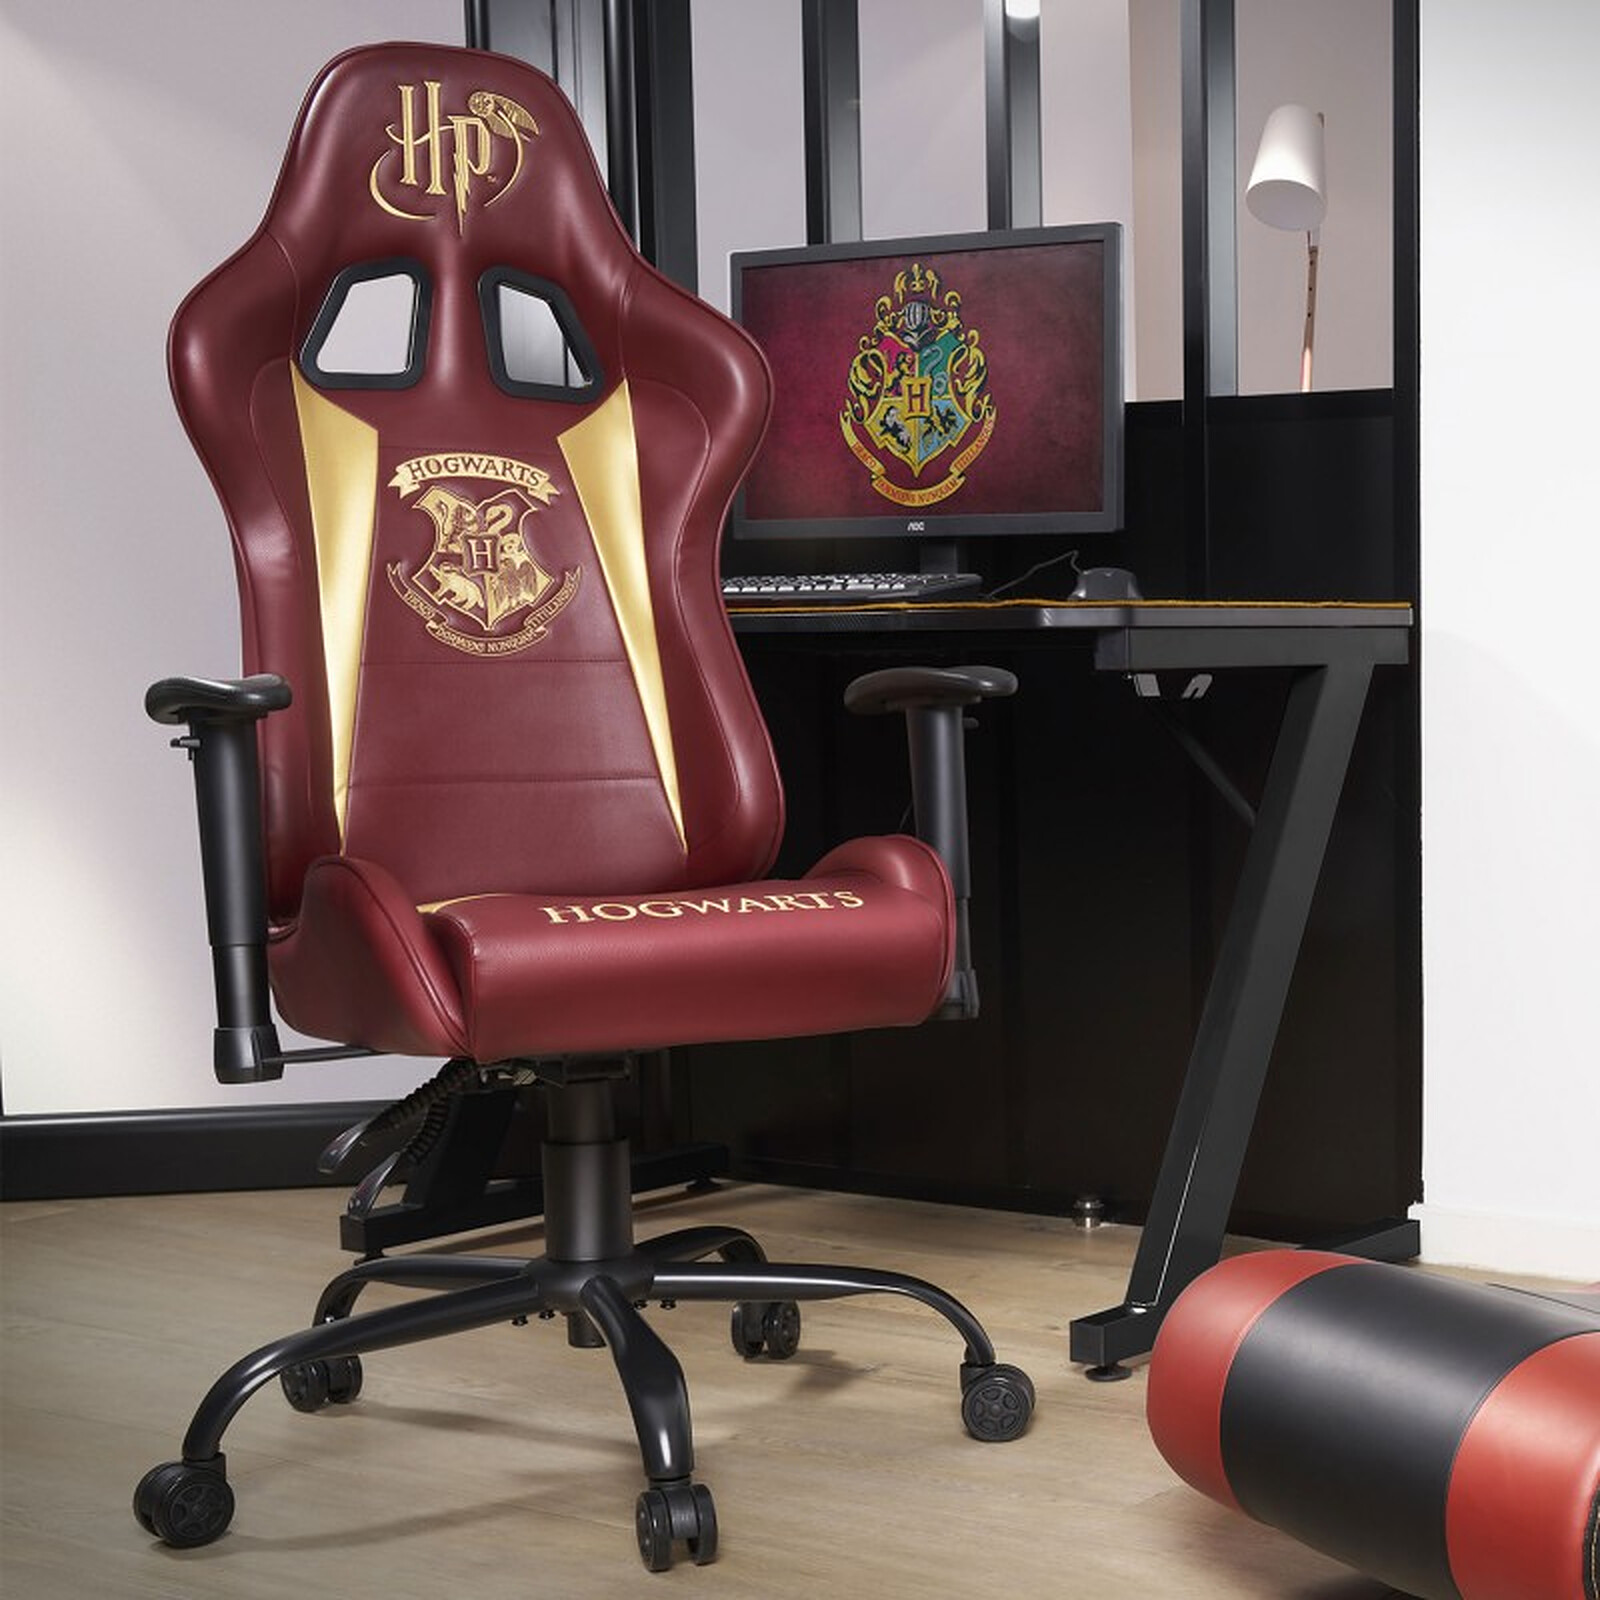 Subsonic - Chaise gaming siège de bureau adulte Assassin's Creed